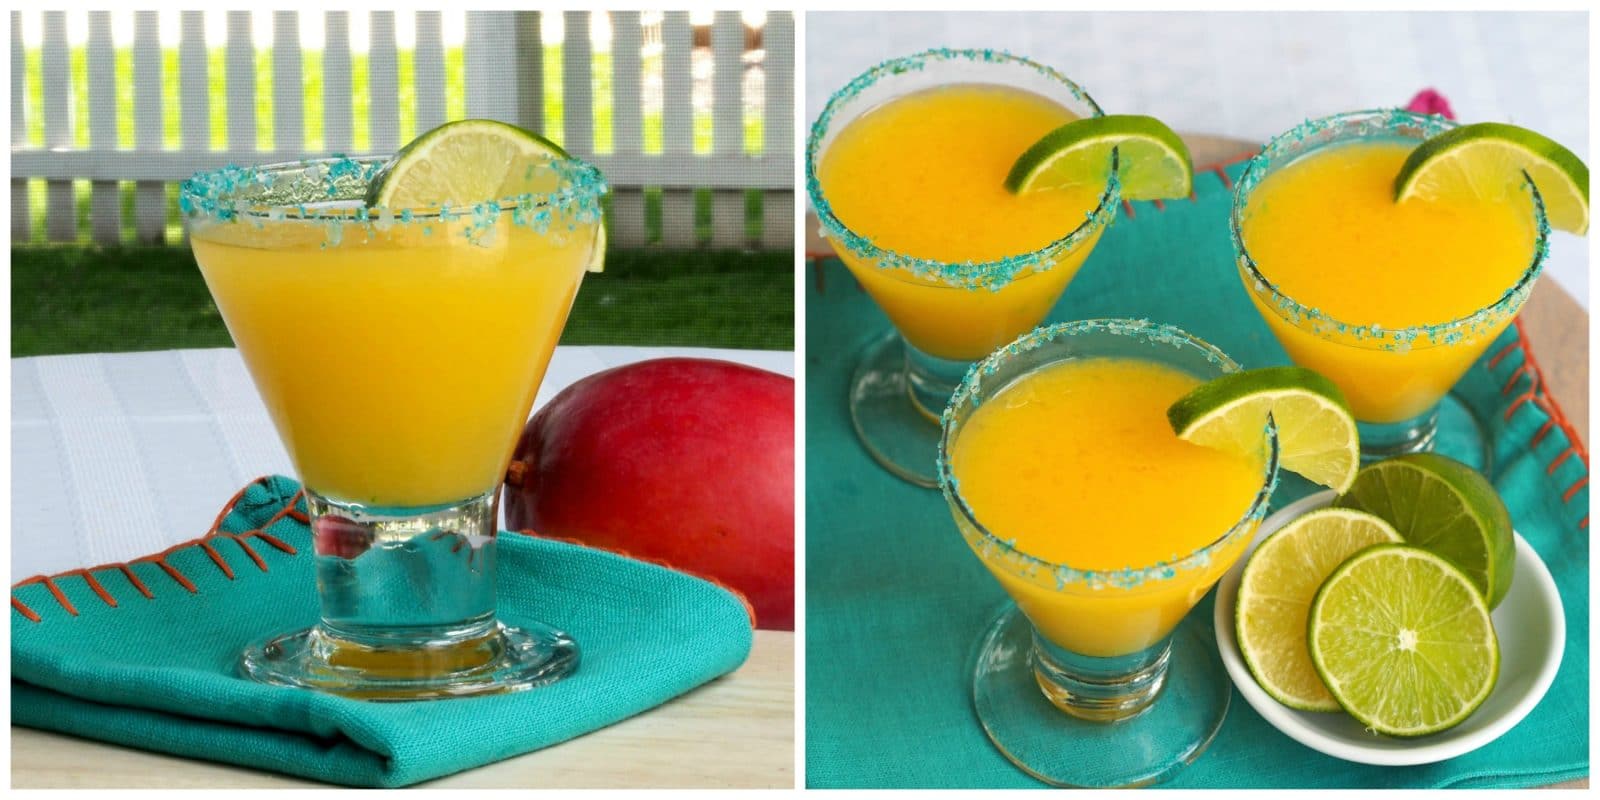 Mango Margaritas - a refreshing margarita made with Del Monte sliced mangoes. www.simplysated.com